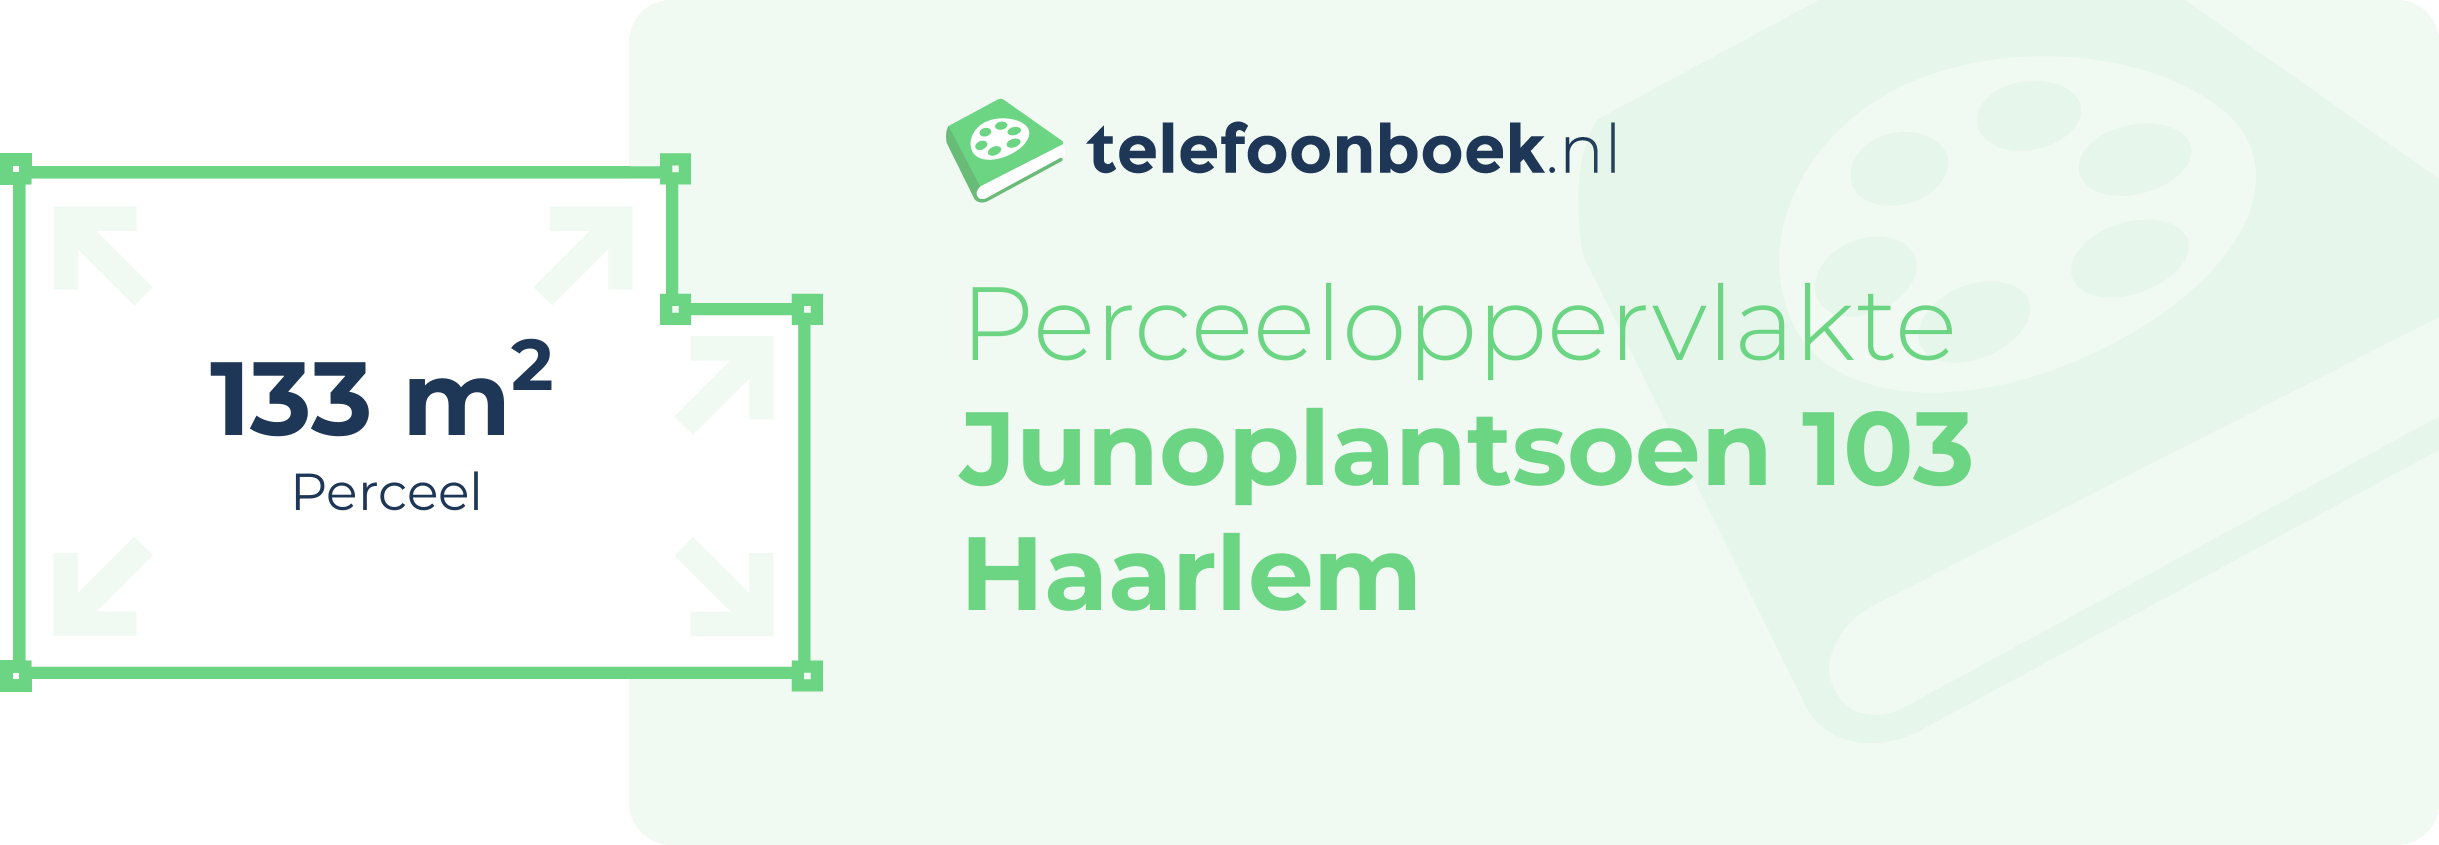 Perceeloppervlakte Junoplantsoen 103 Haarlem